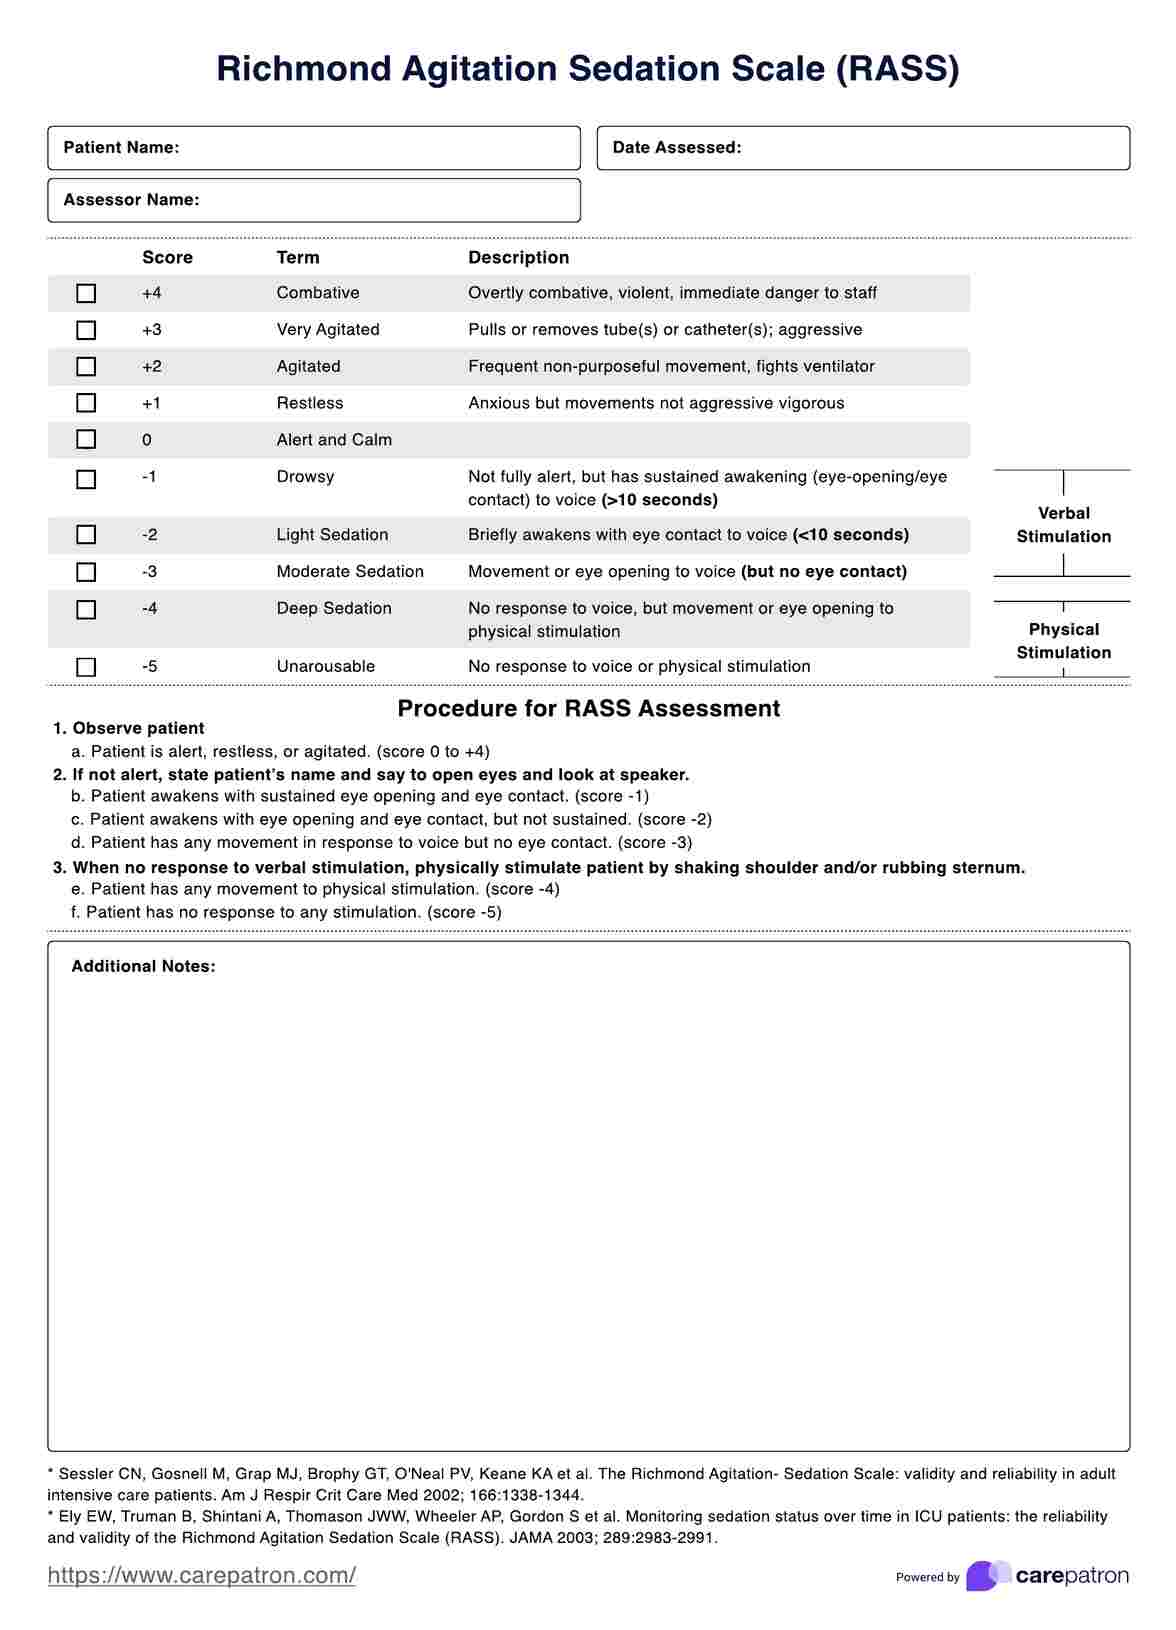 Richmond Agitation Sedation Scale (RASS) PDF Example